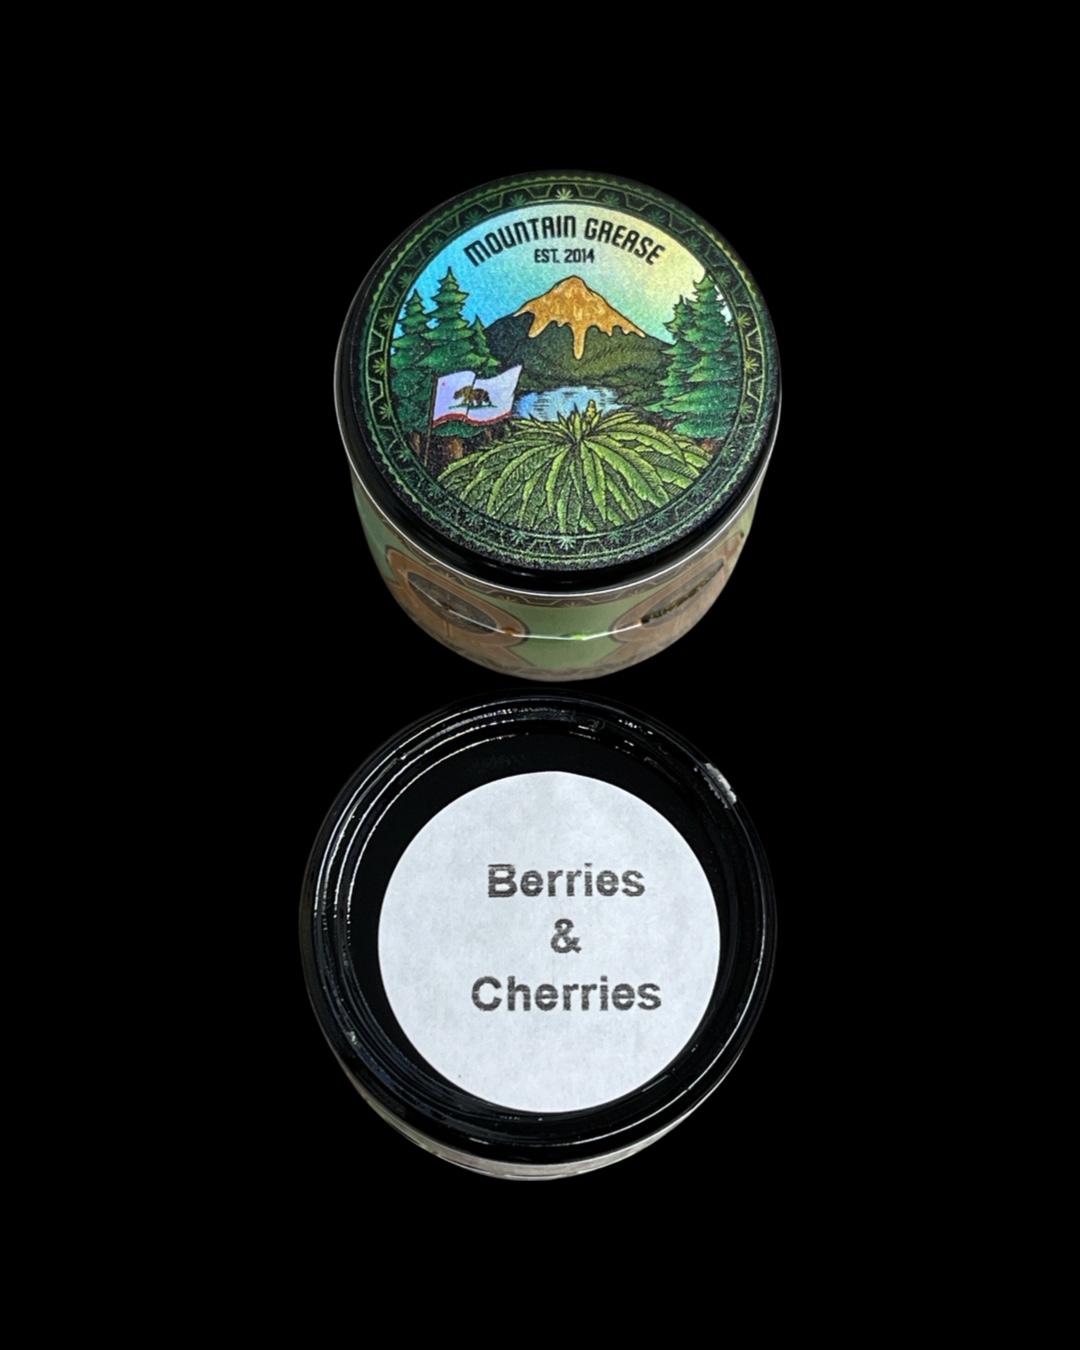 Mountain Grease x Ohmega Farms - Berries & Cherries 70-120u Cold Cure